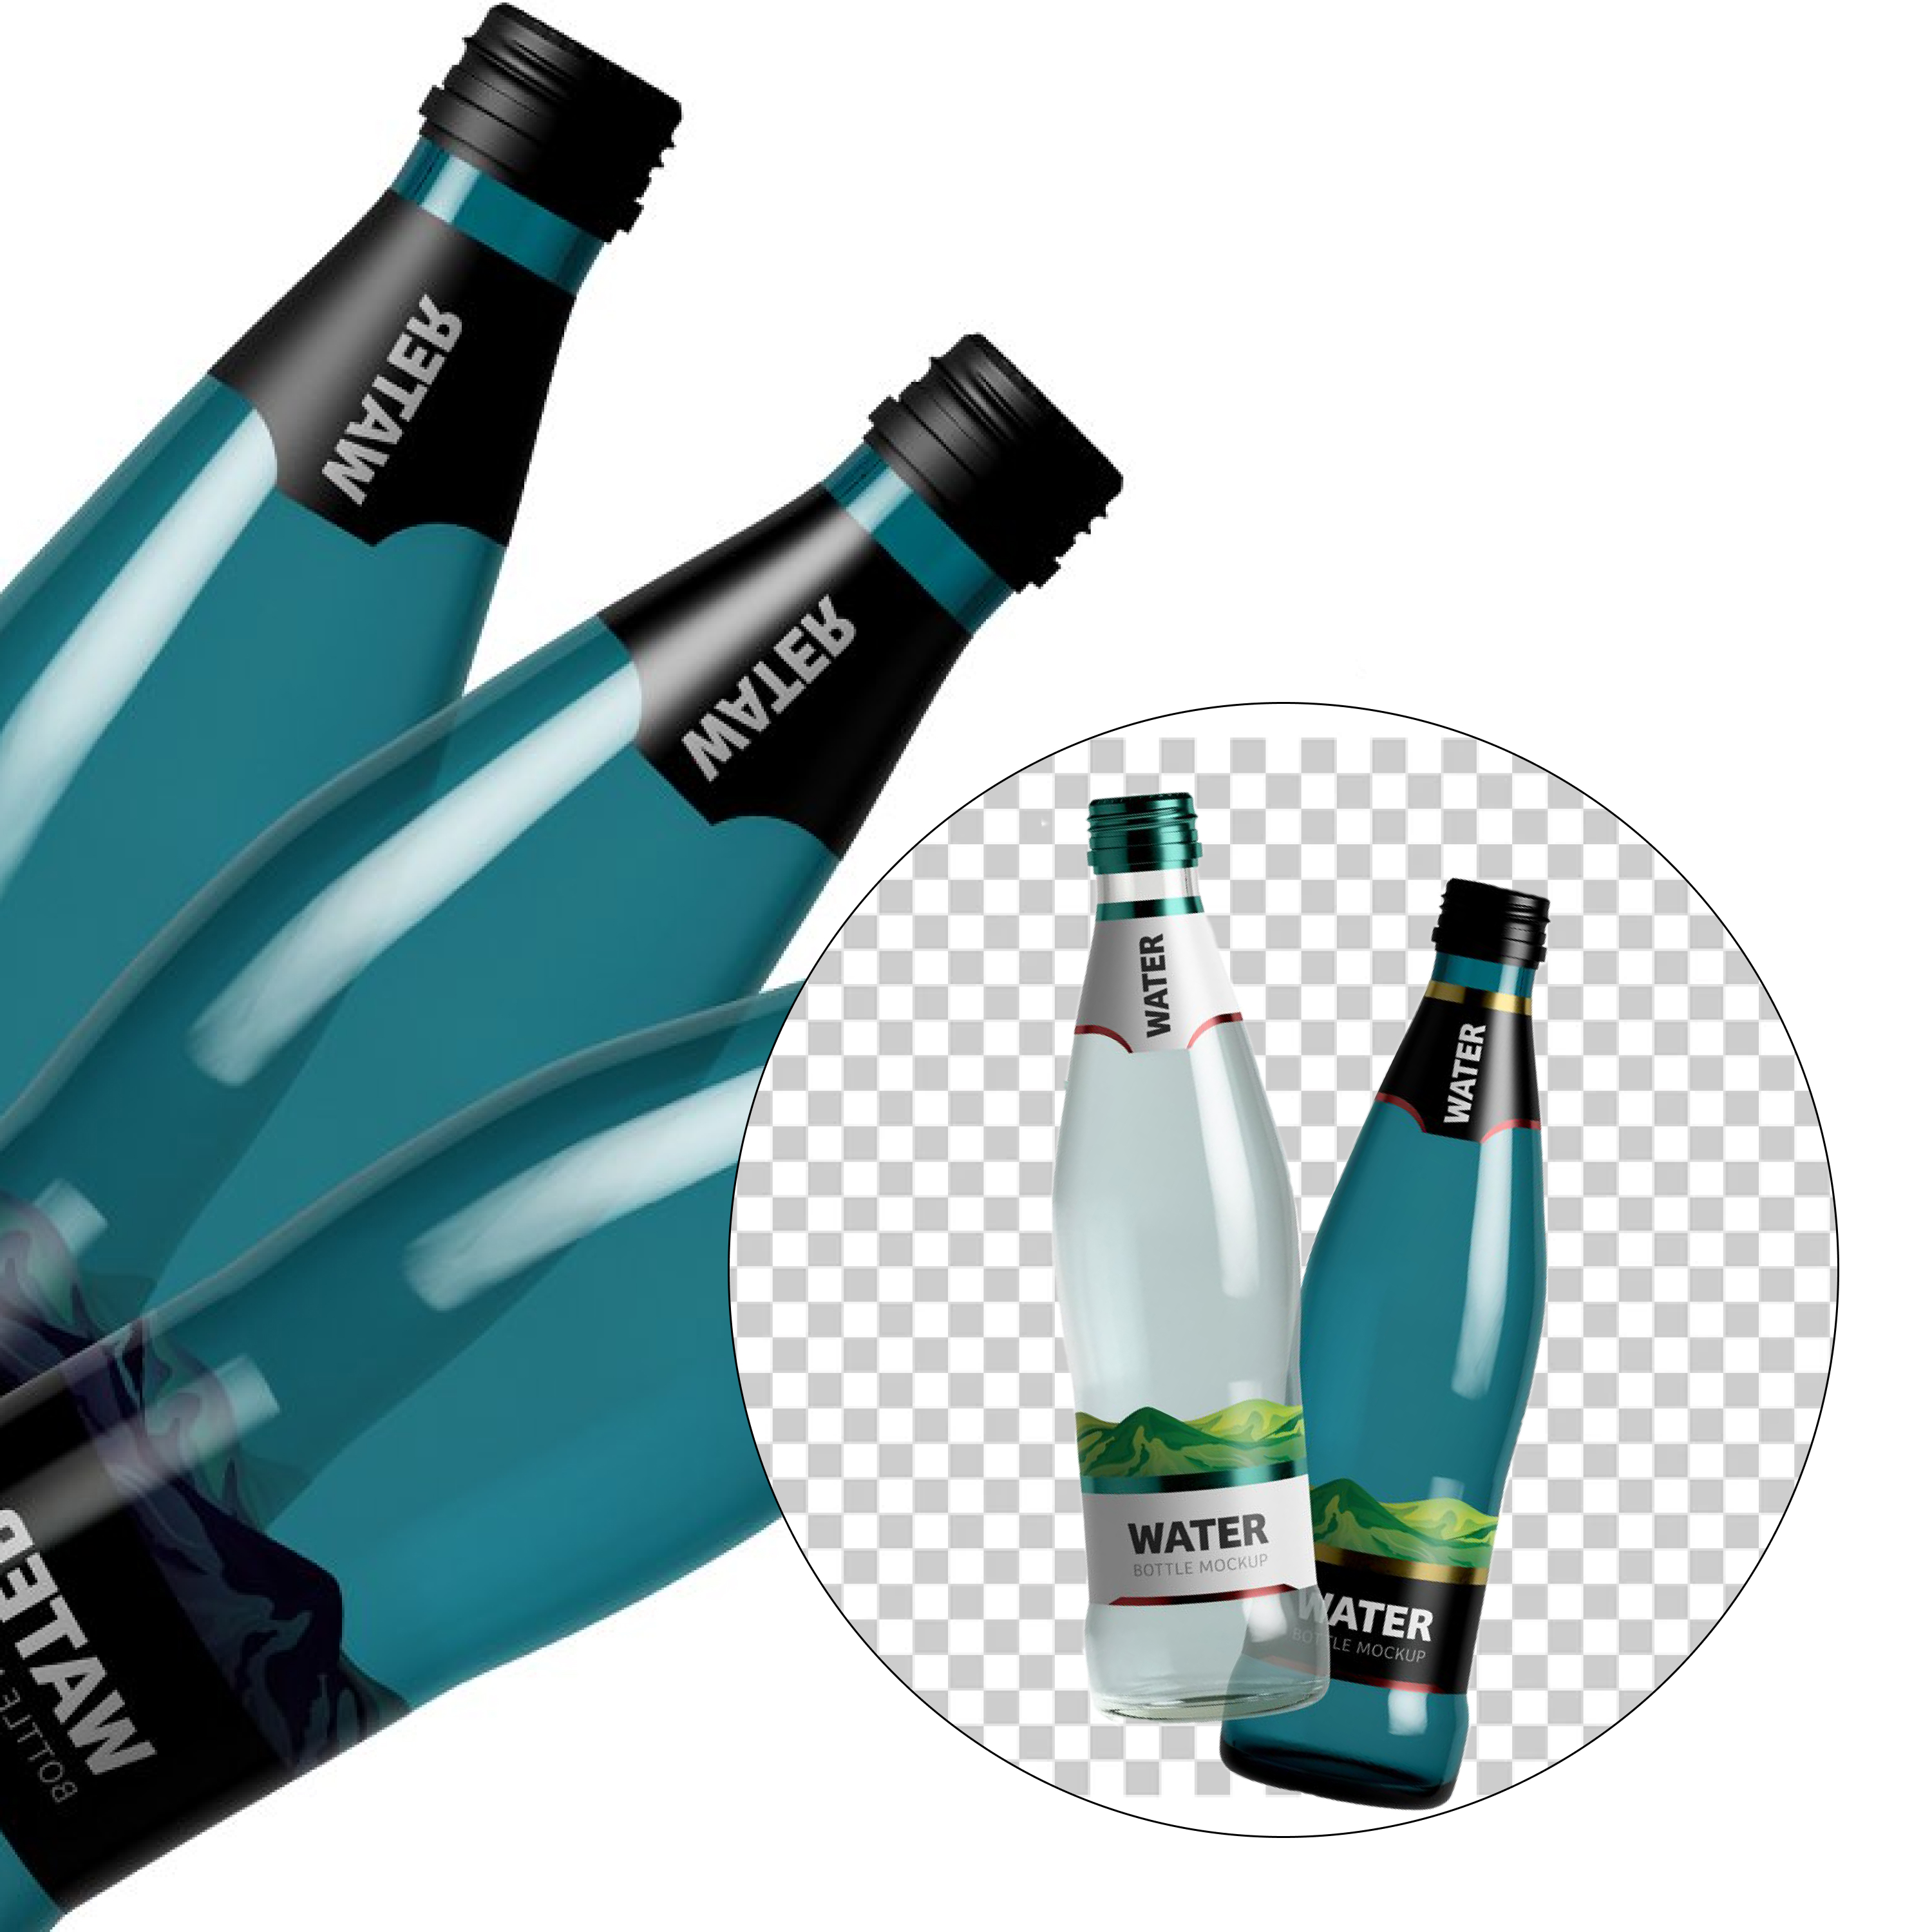 Free Mini Glass Water Bottle Mockup (PSD)